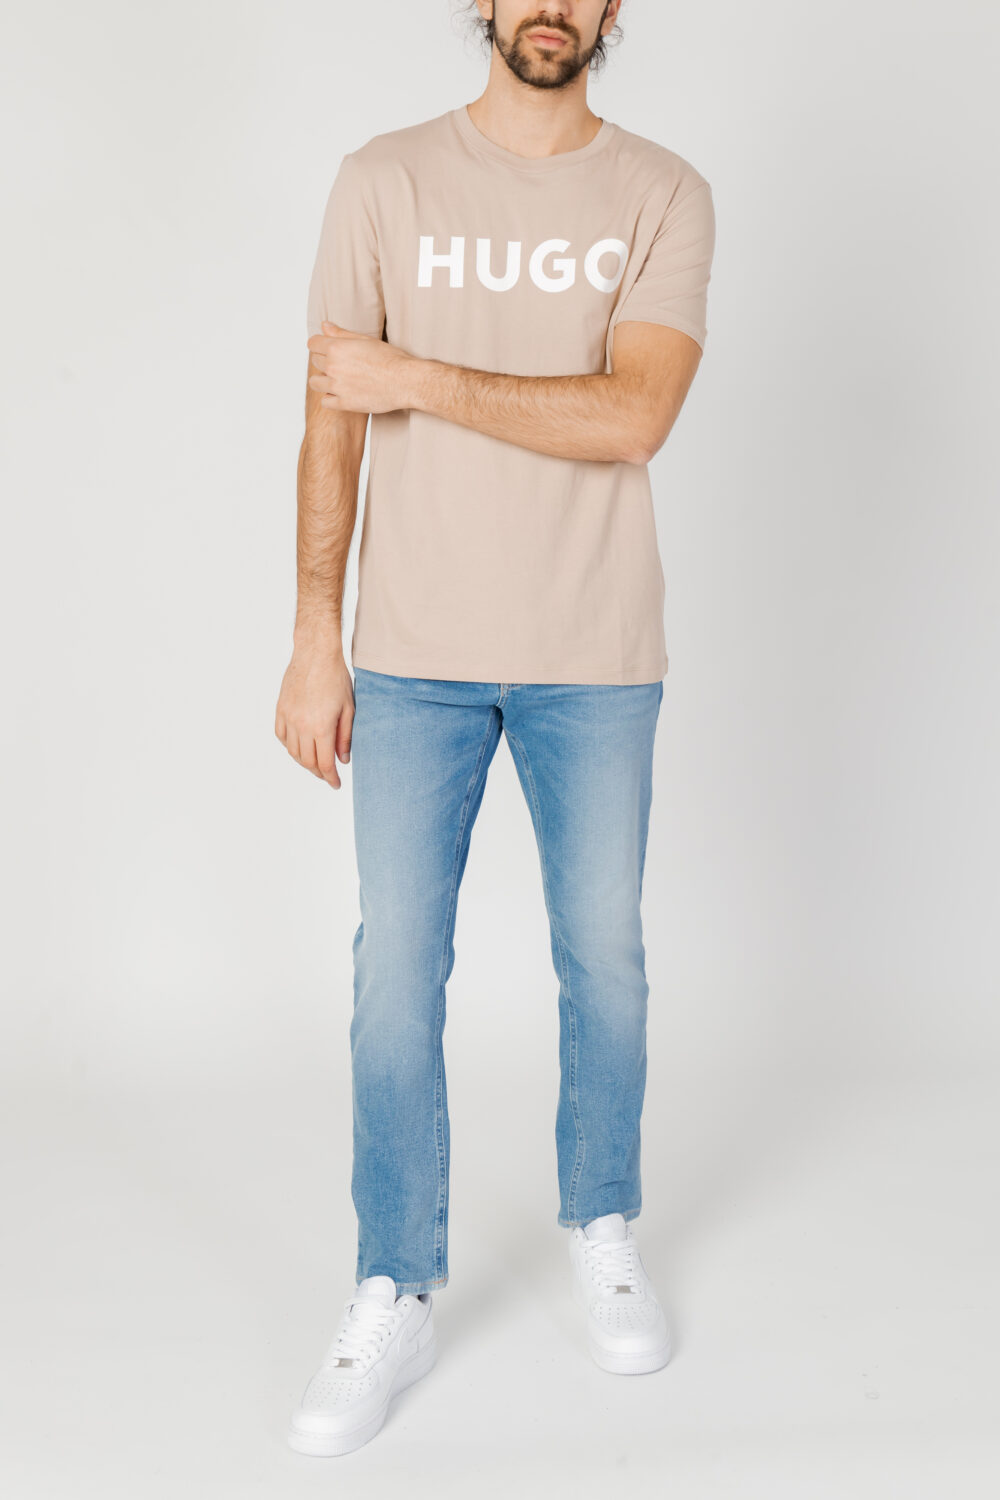 T-shirt Hugo Dulivio 10229761 01 Beige - Foto 4